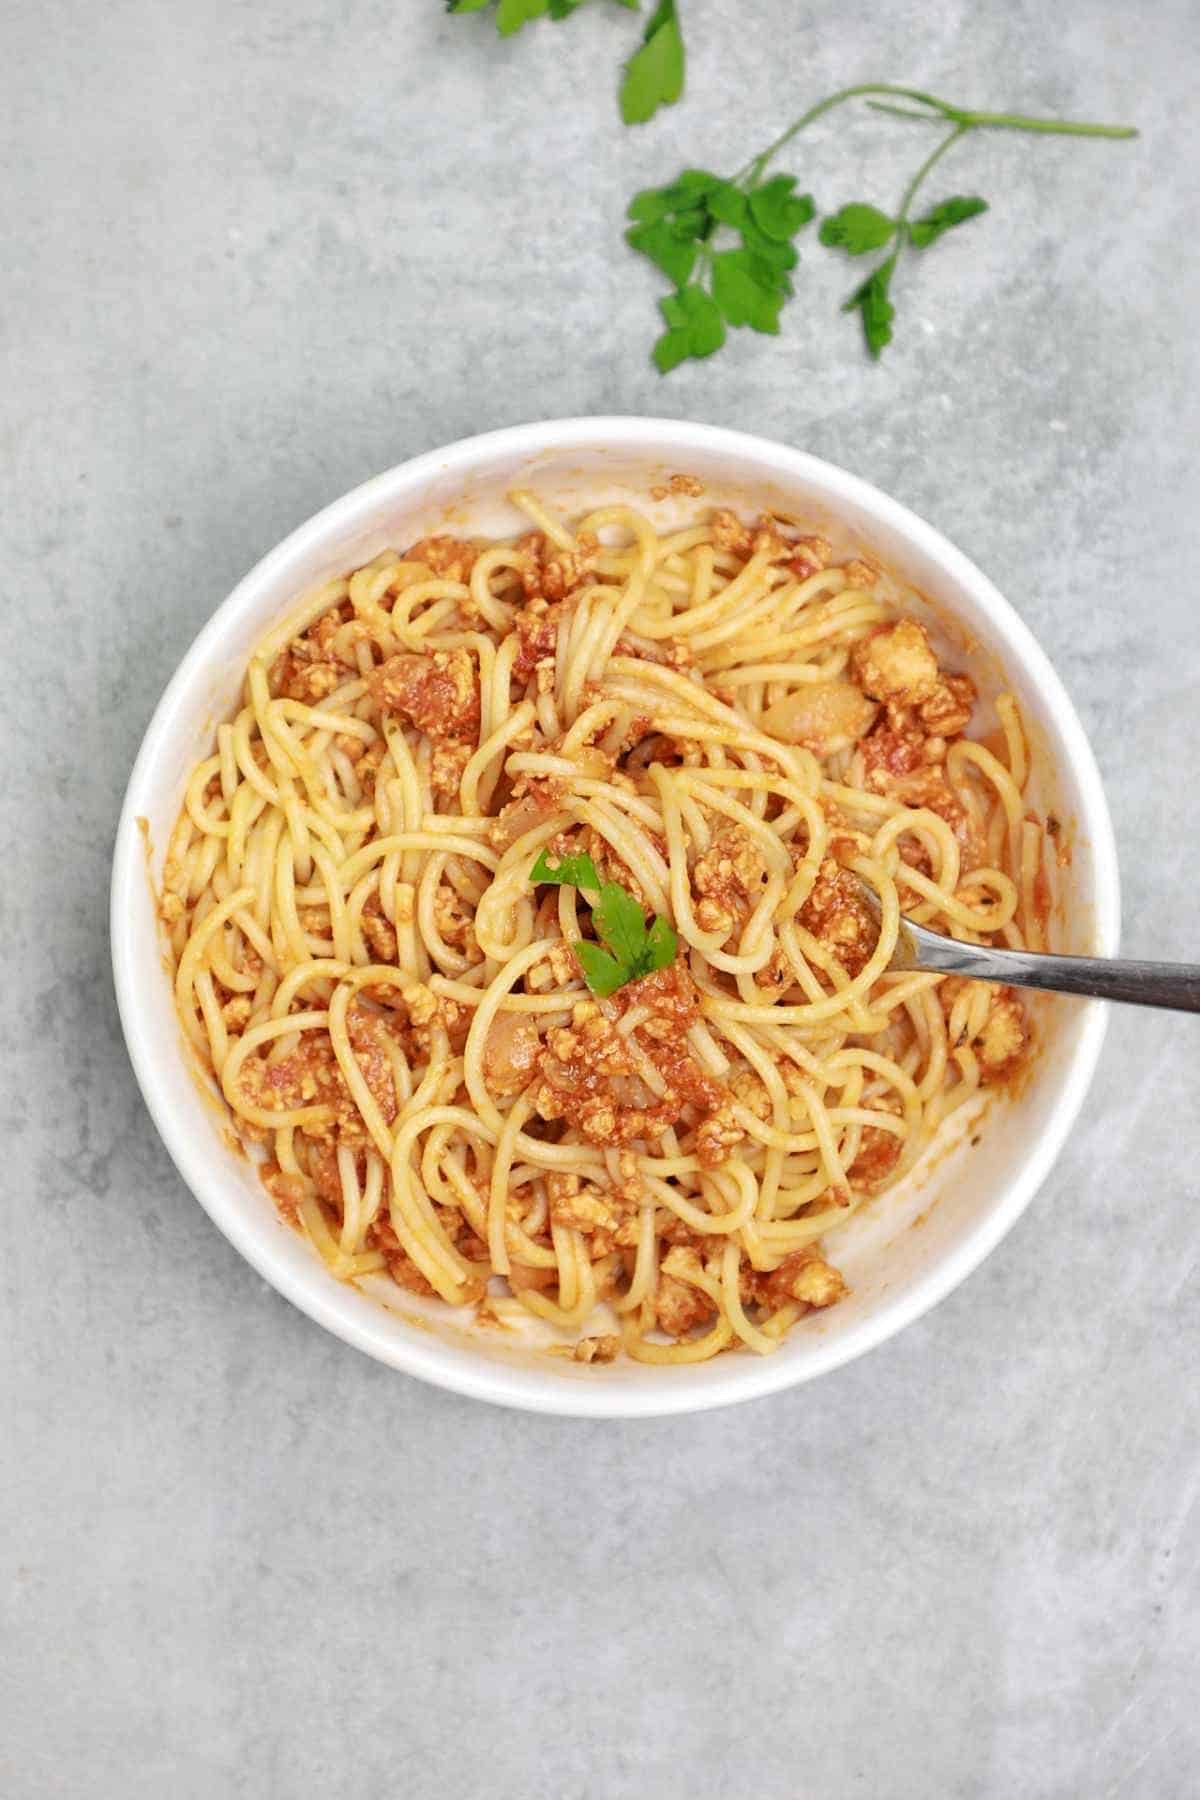 chicken spaghetti bolognese in a plate.